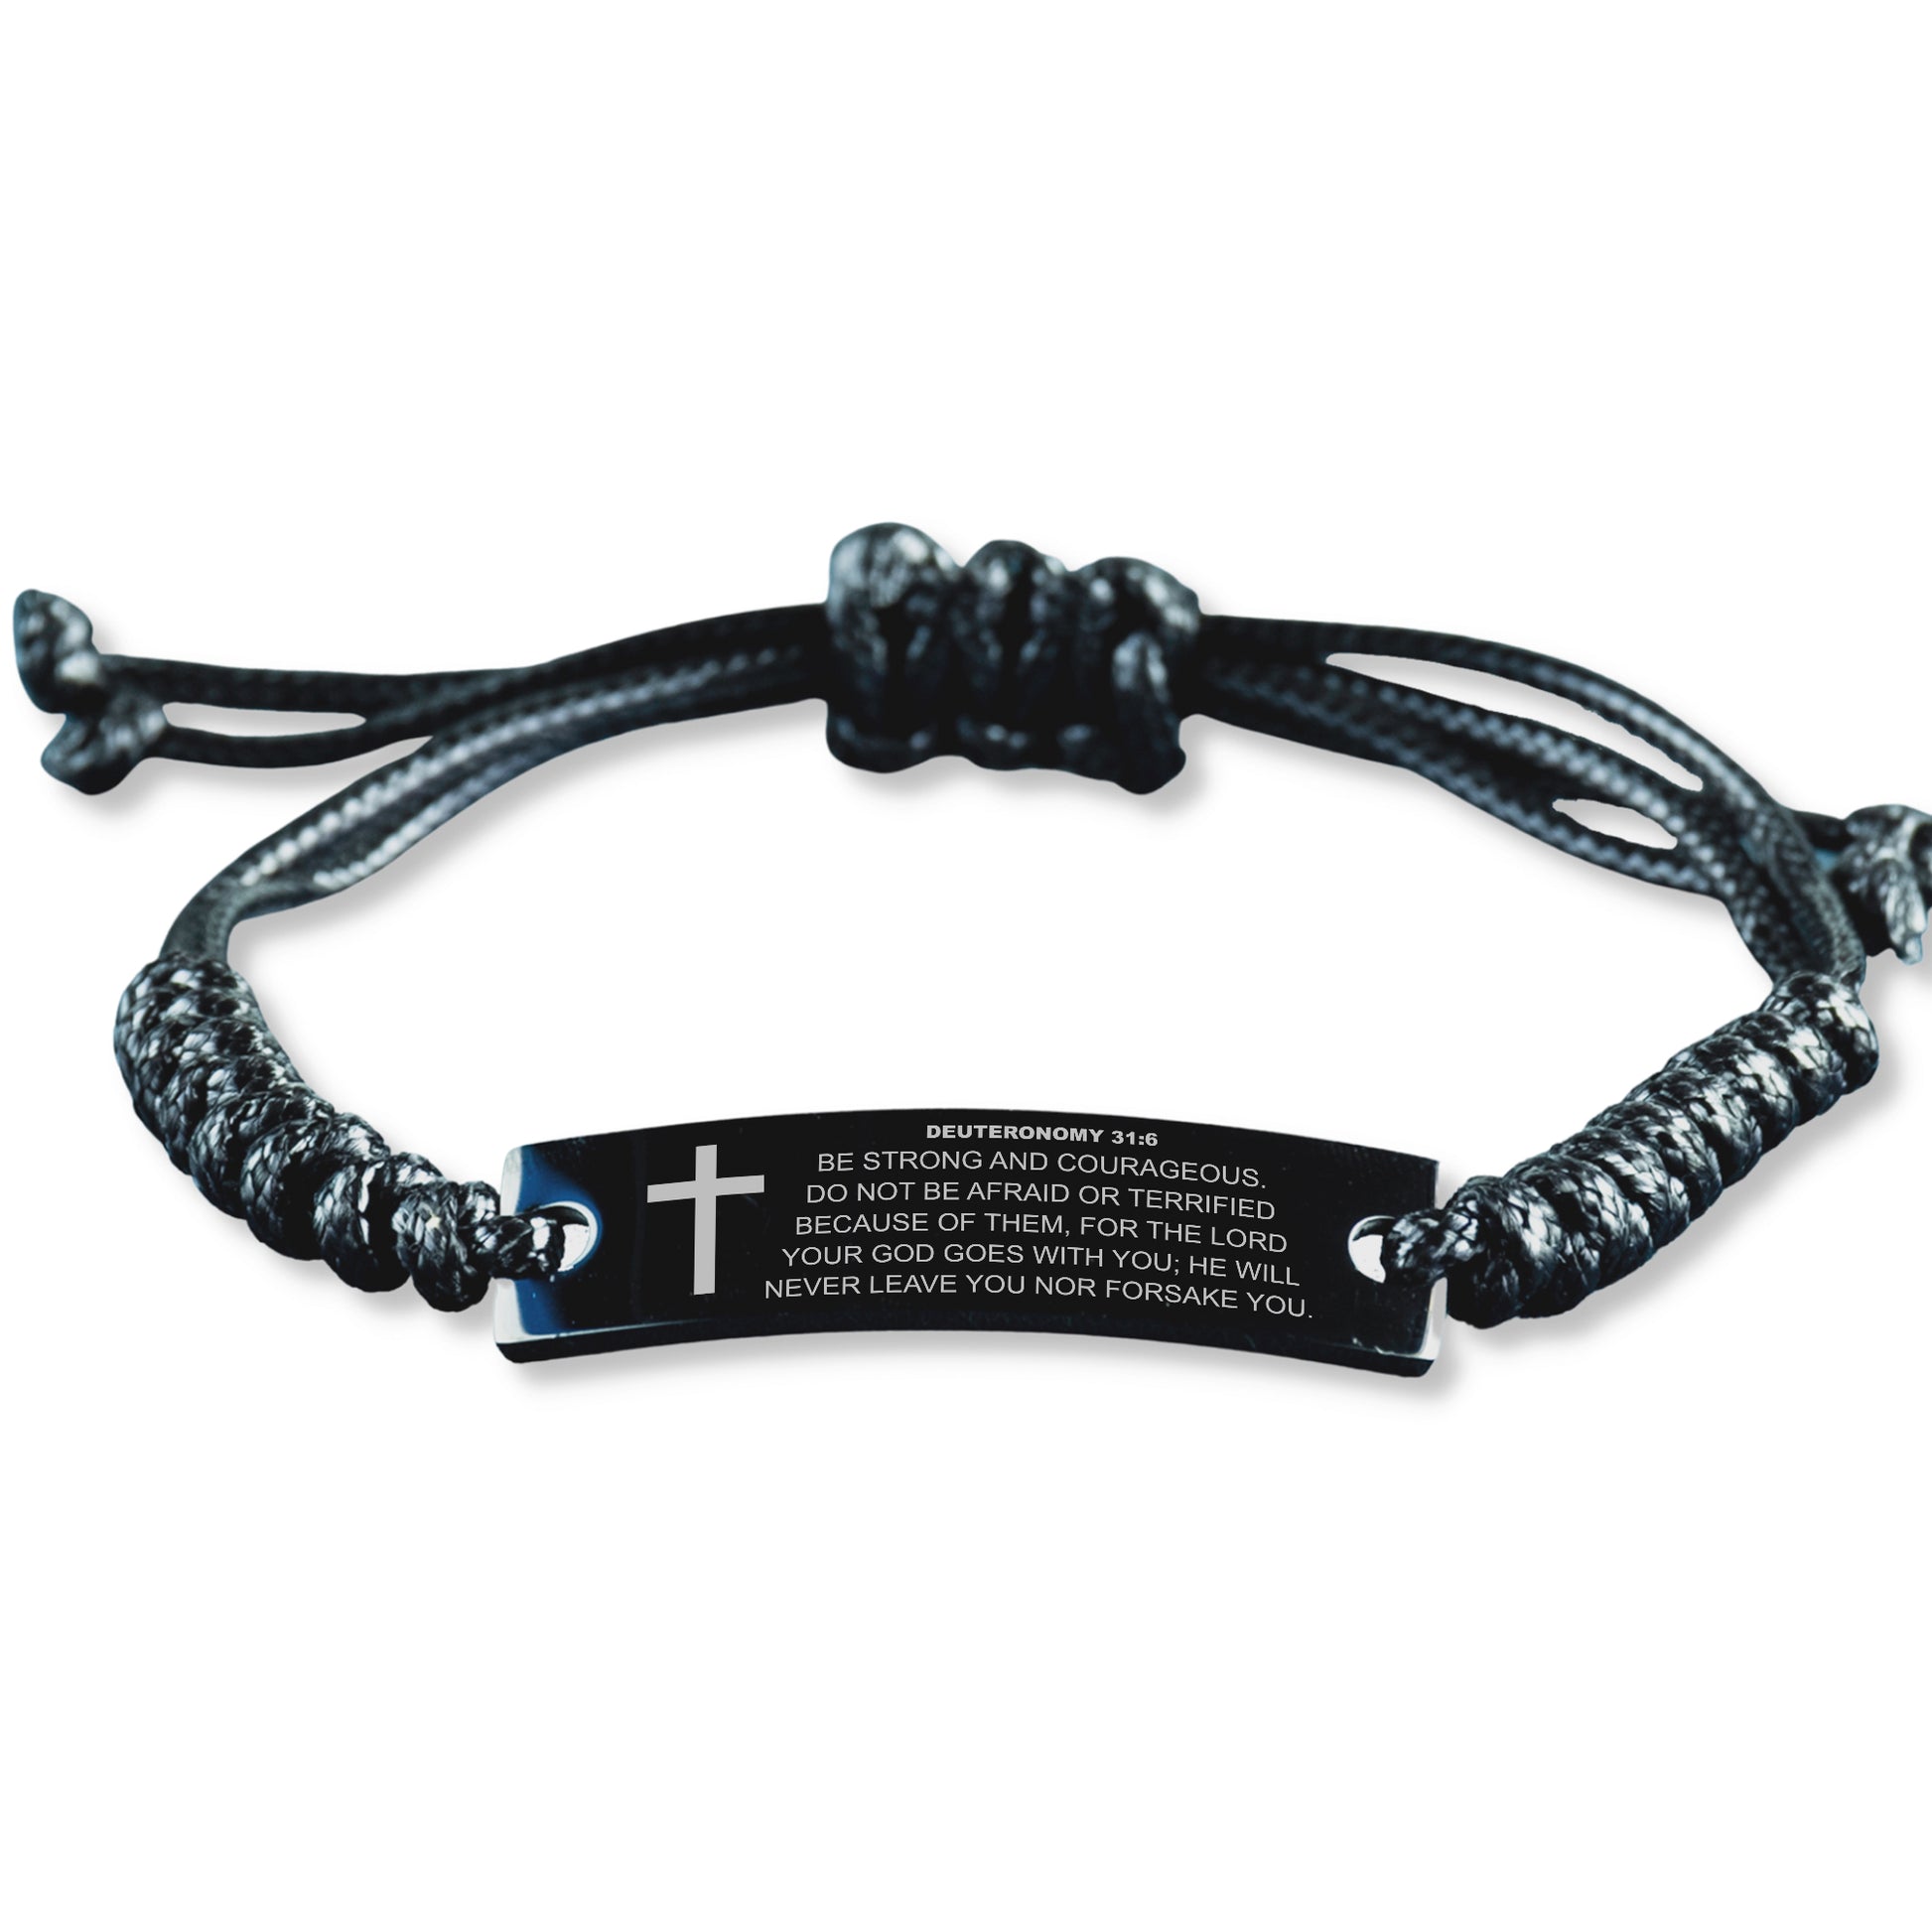 Deuteronomy 31 6 Bracelet, Be Strong And Courageous, Bible Verse Bracelet, Christian Bracelet, Engraved Black Braided Rope Bracelet.